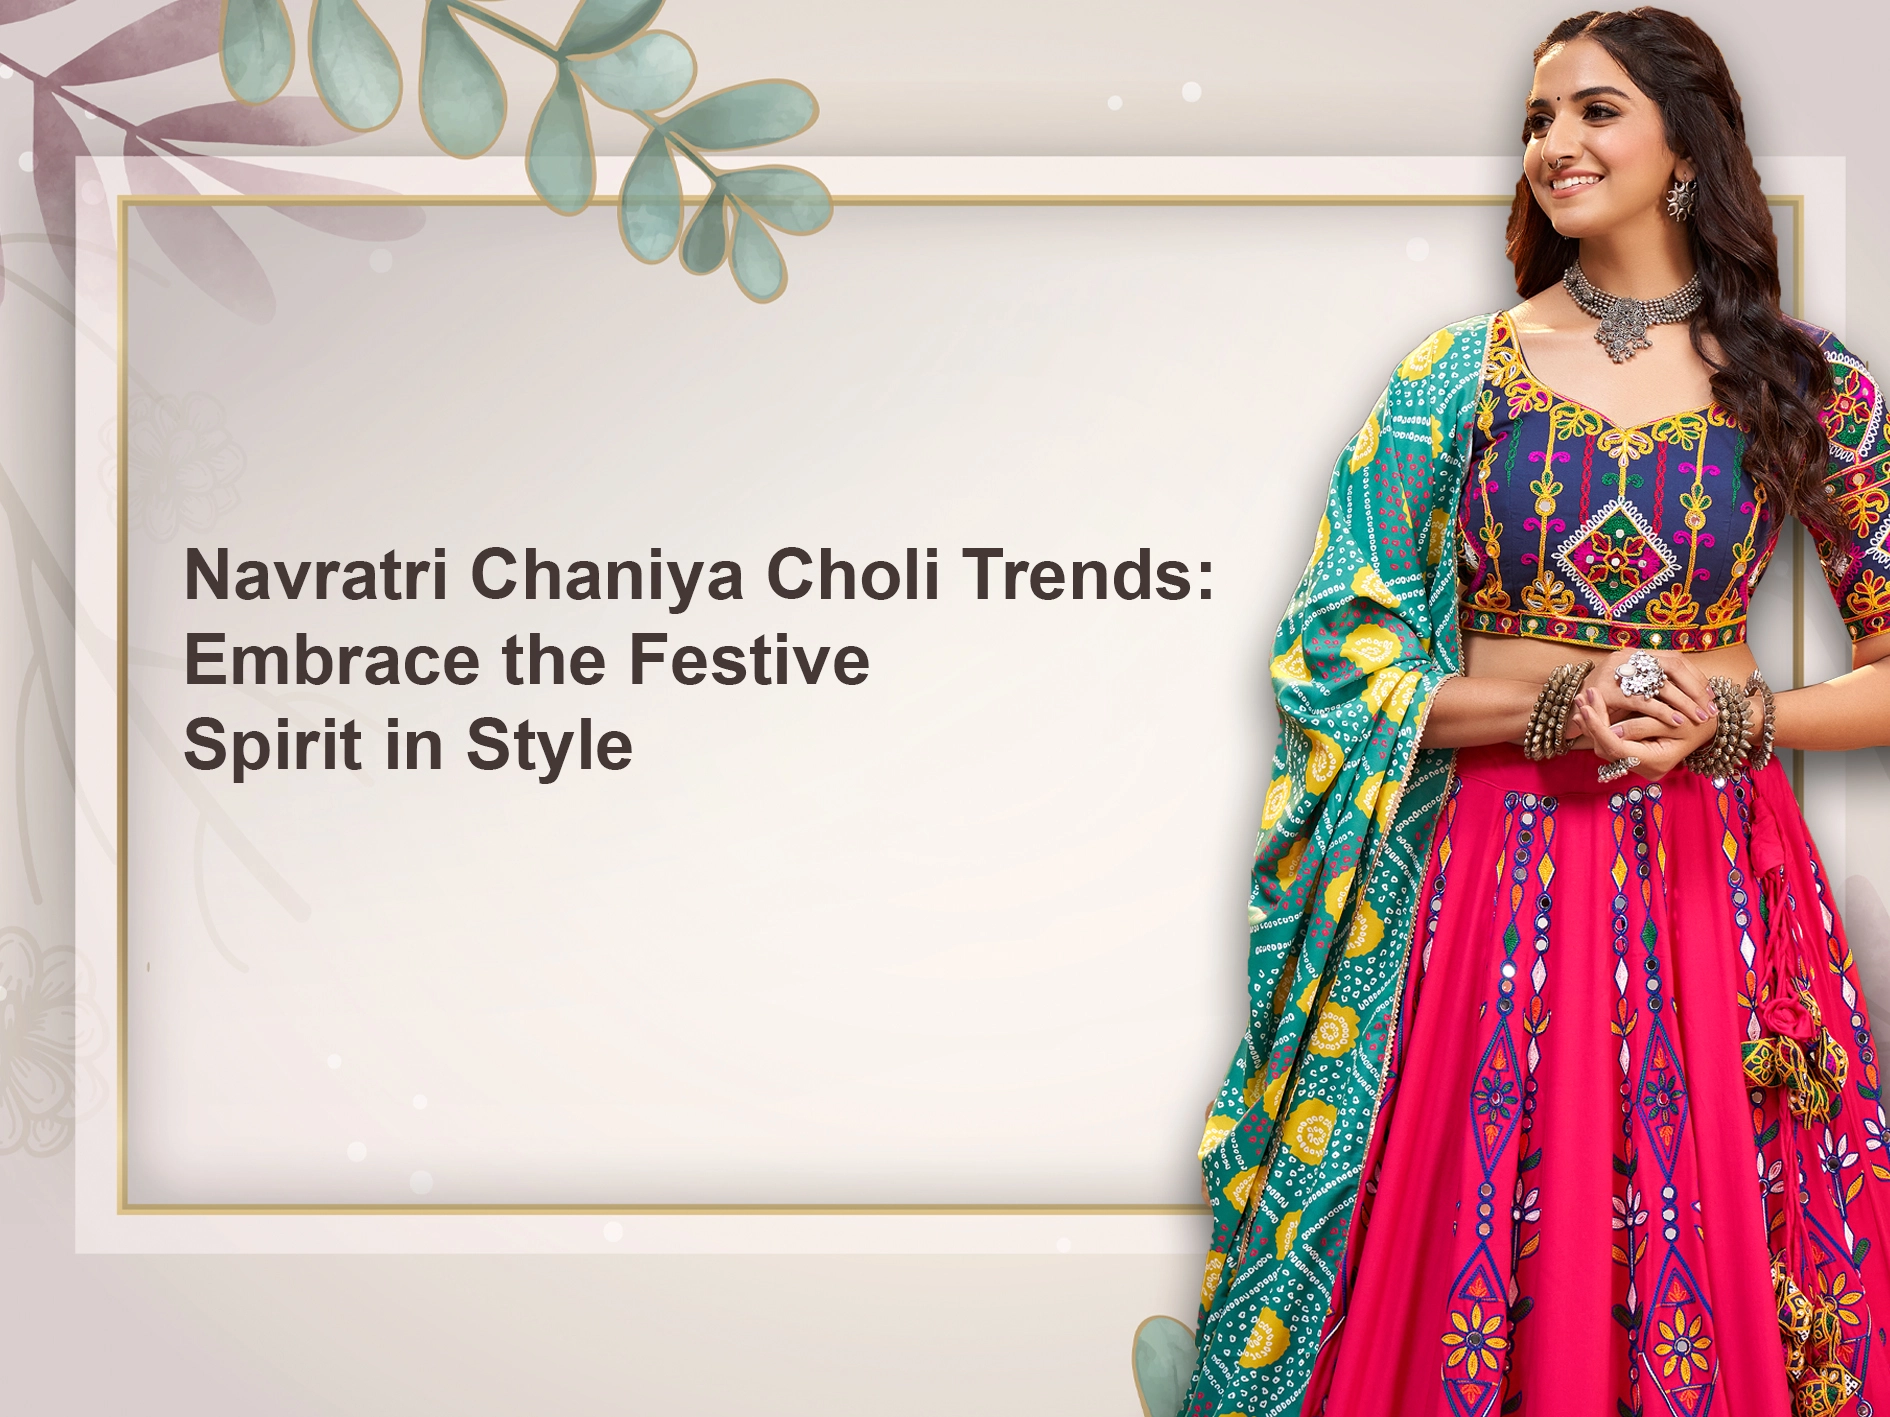 Navratri Chaniya Choli Trends: Embrace the Festive Spirit in Style